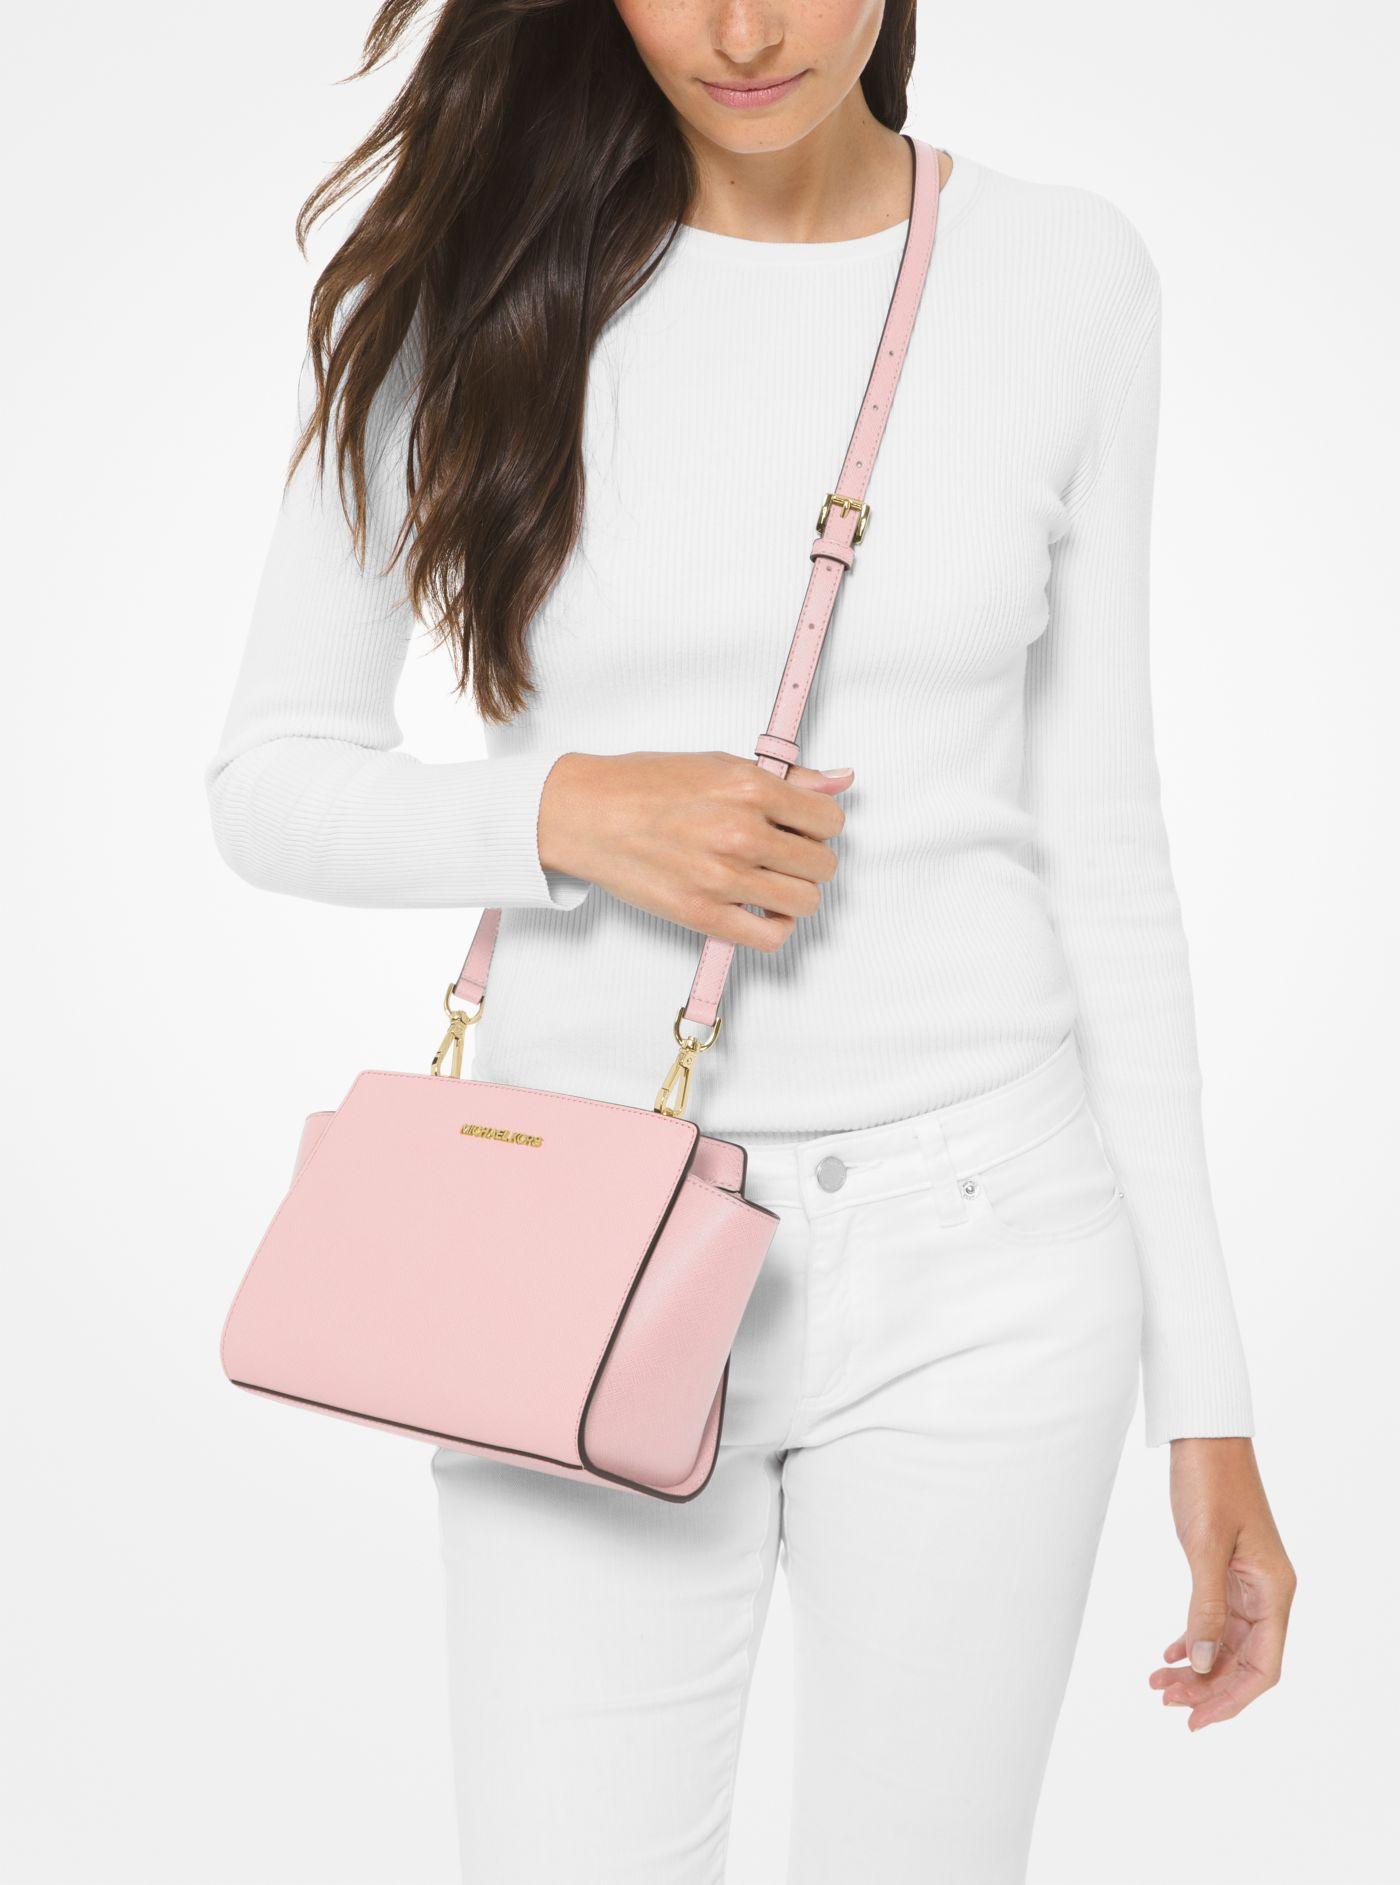 Michael Kors Selma Medium Saffiano Leather Crossbody Bag in Powder Blush  (Pink) - Lyst